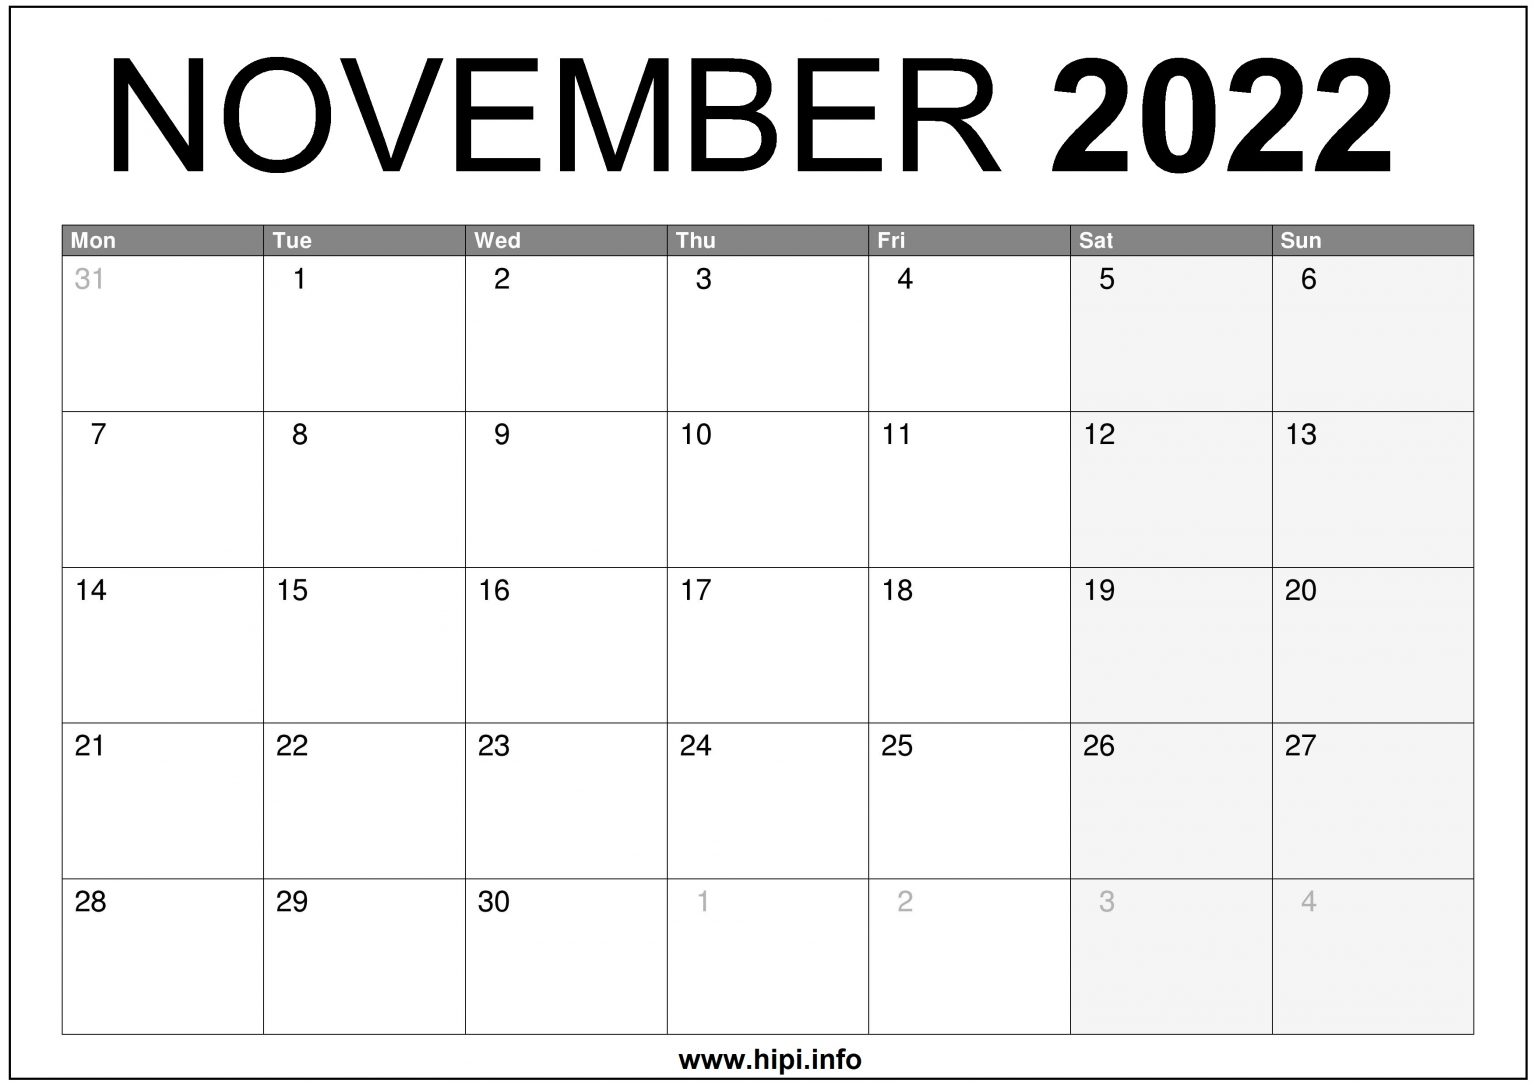 November 2022 UK Calendar Printable Free Hipi.info